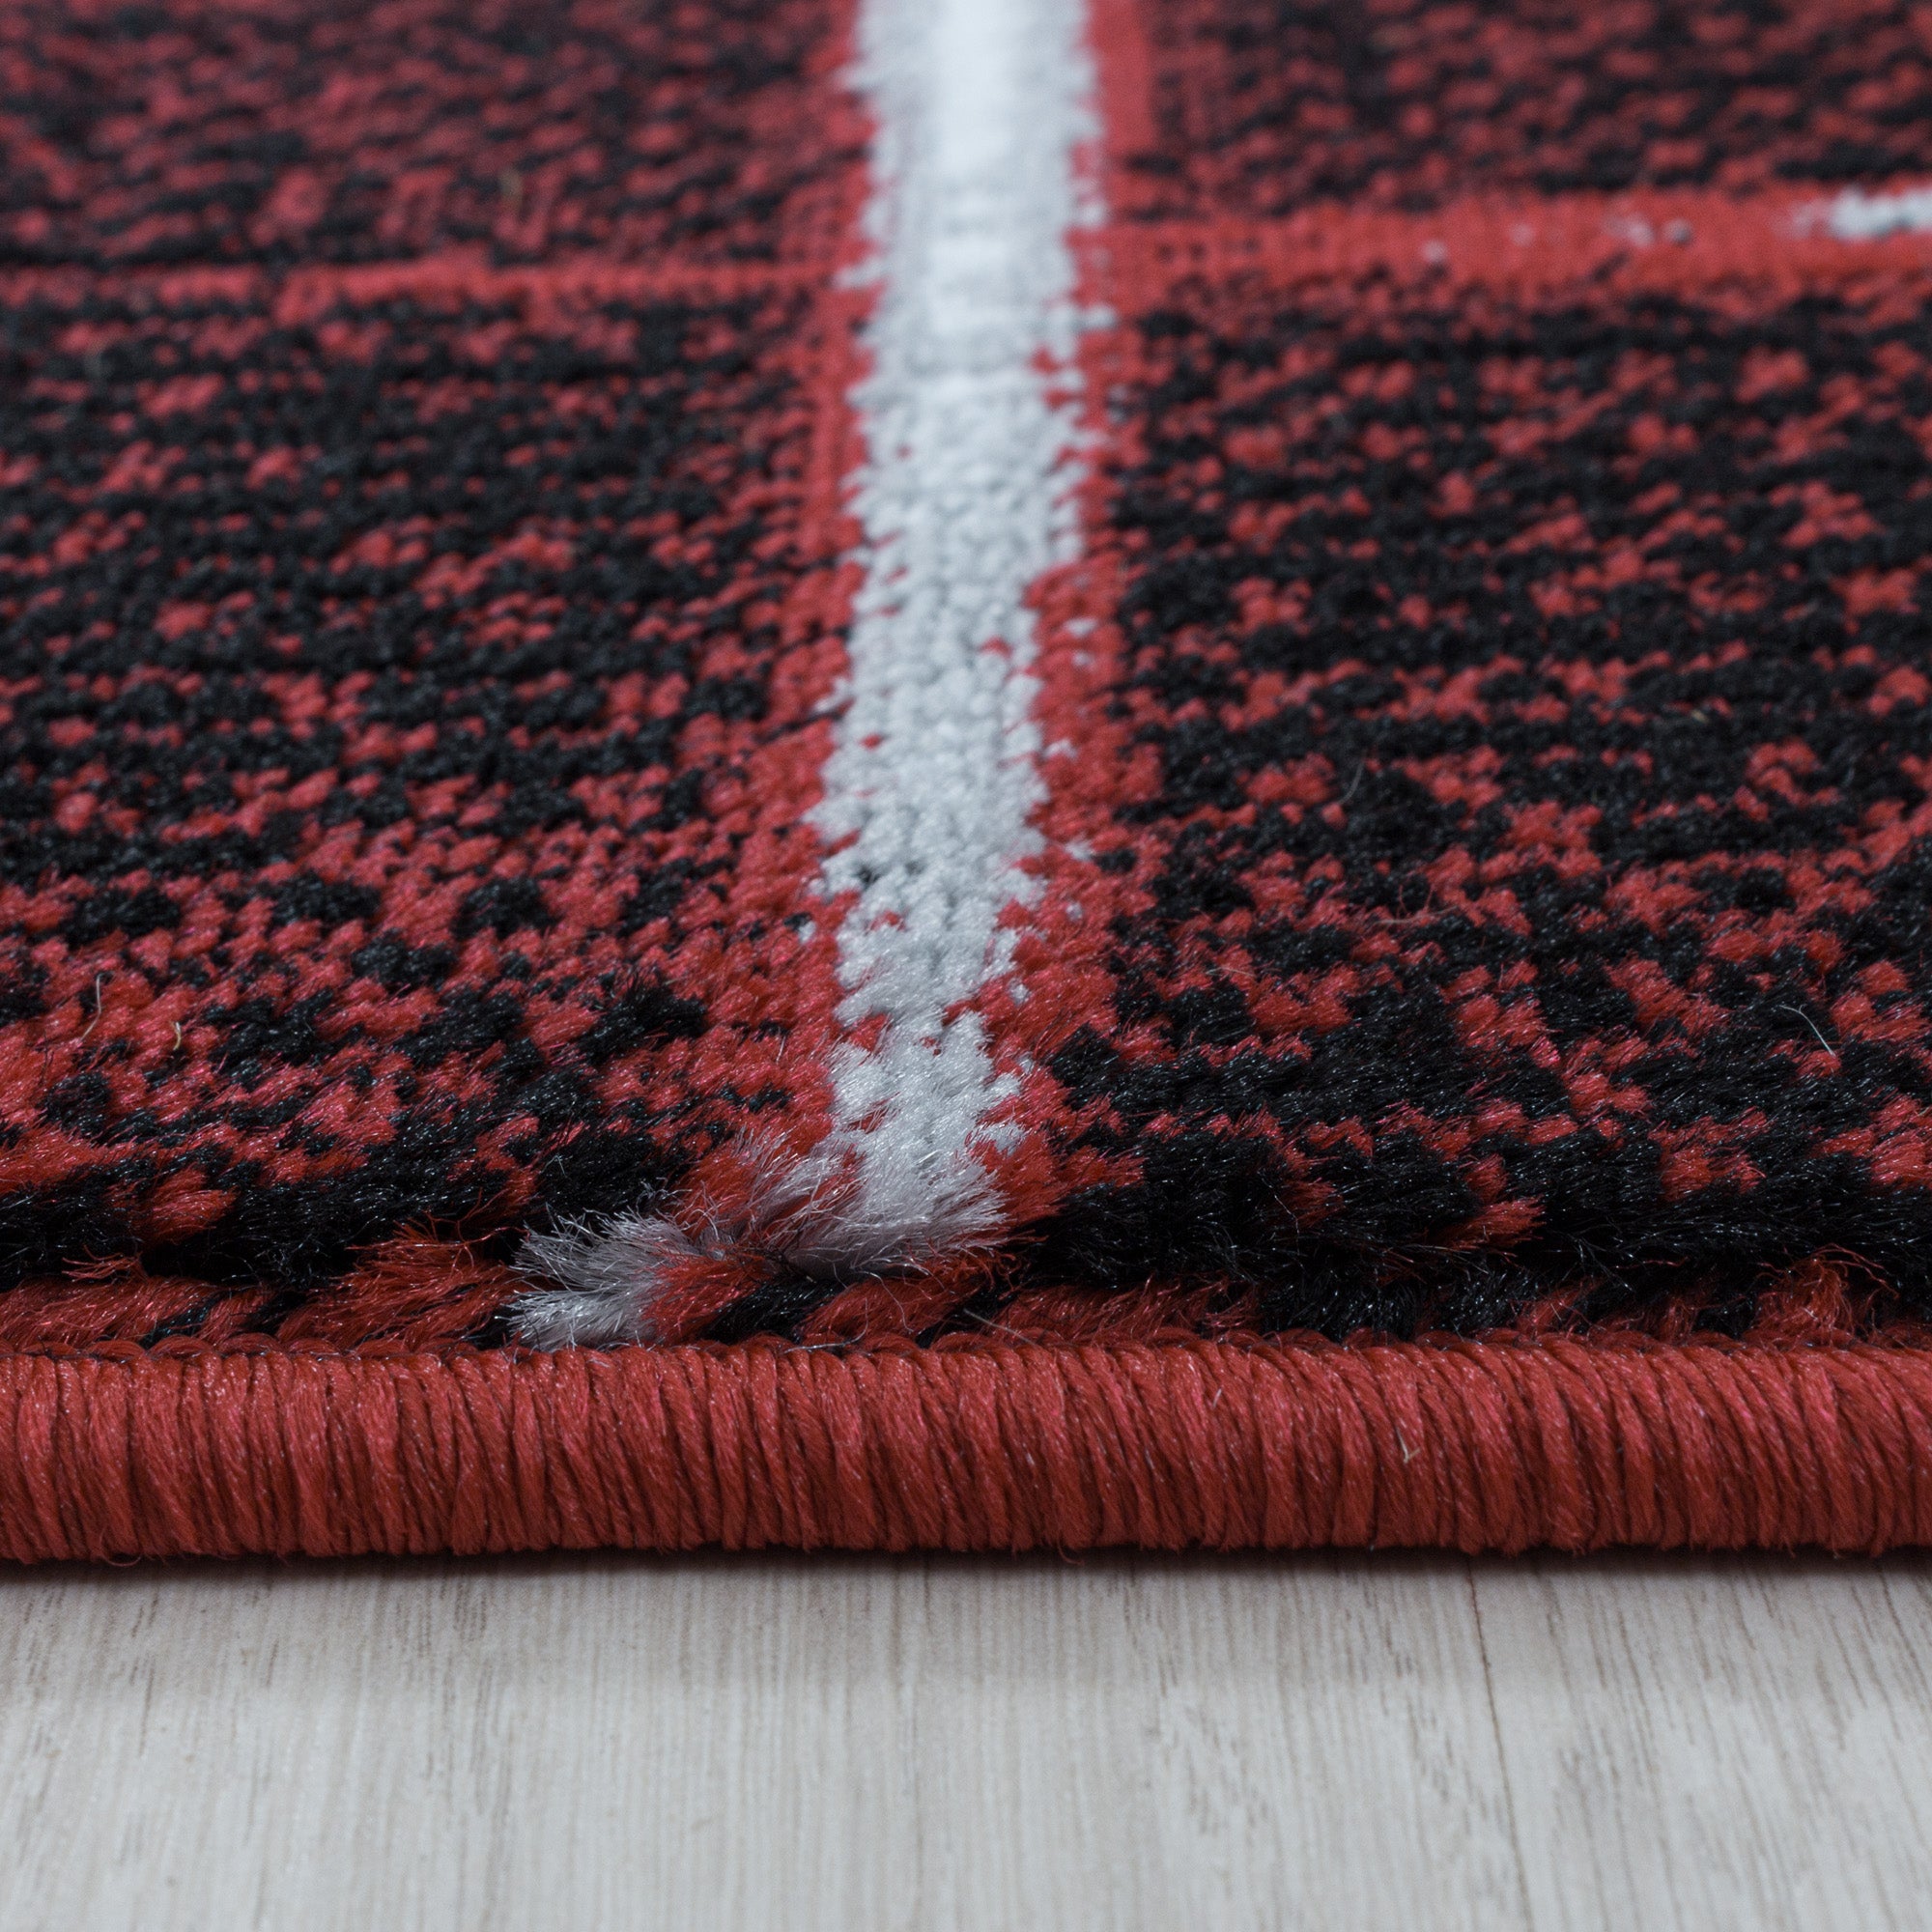 Kurzflor Design Teppich Wohnzimmerteppich Gitter Muster Soft Flor Rot